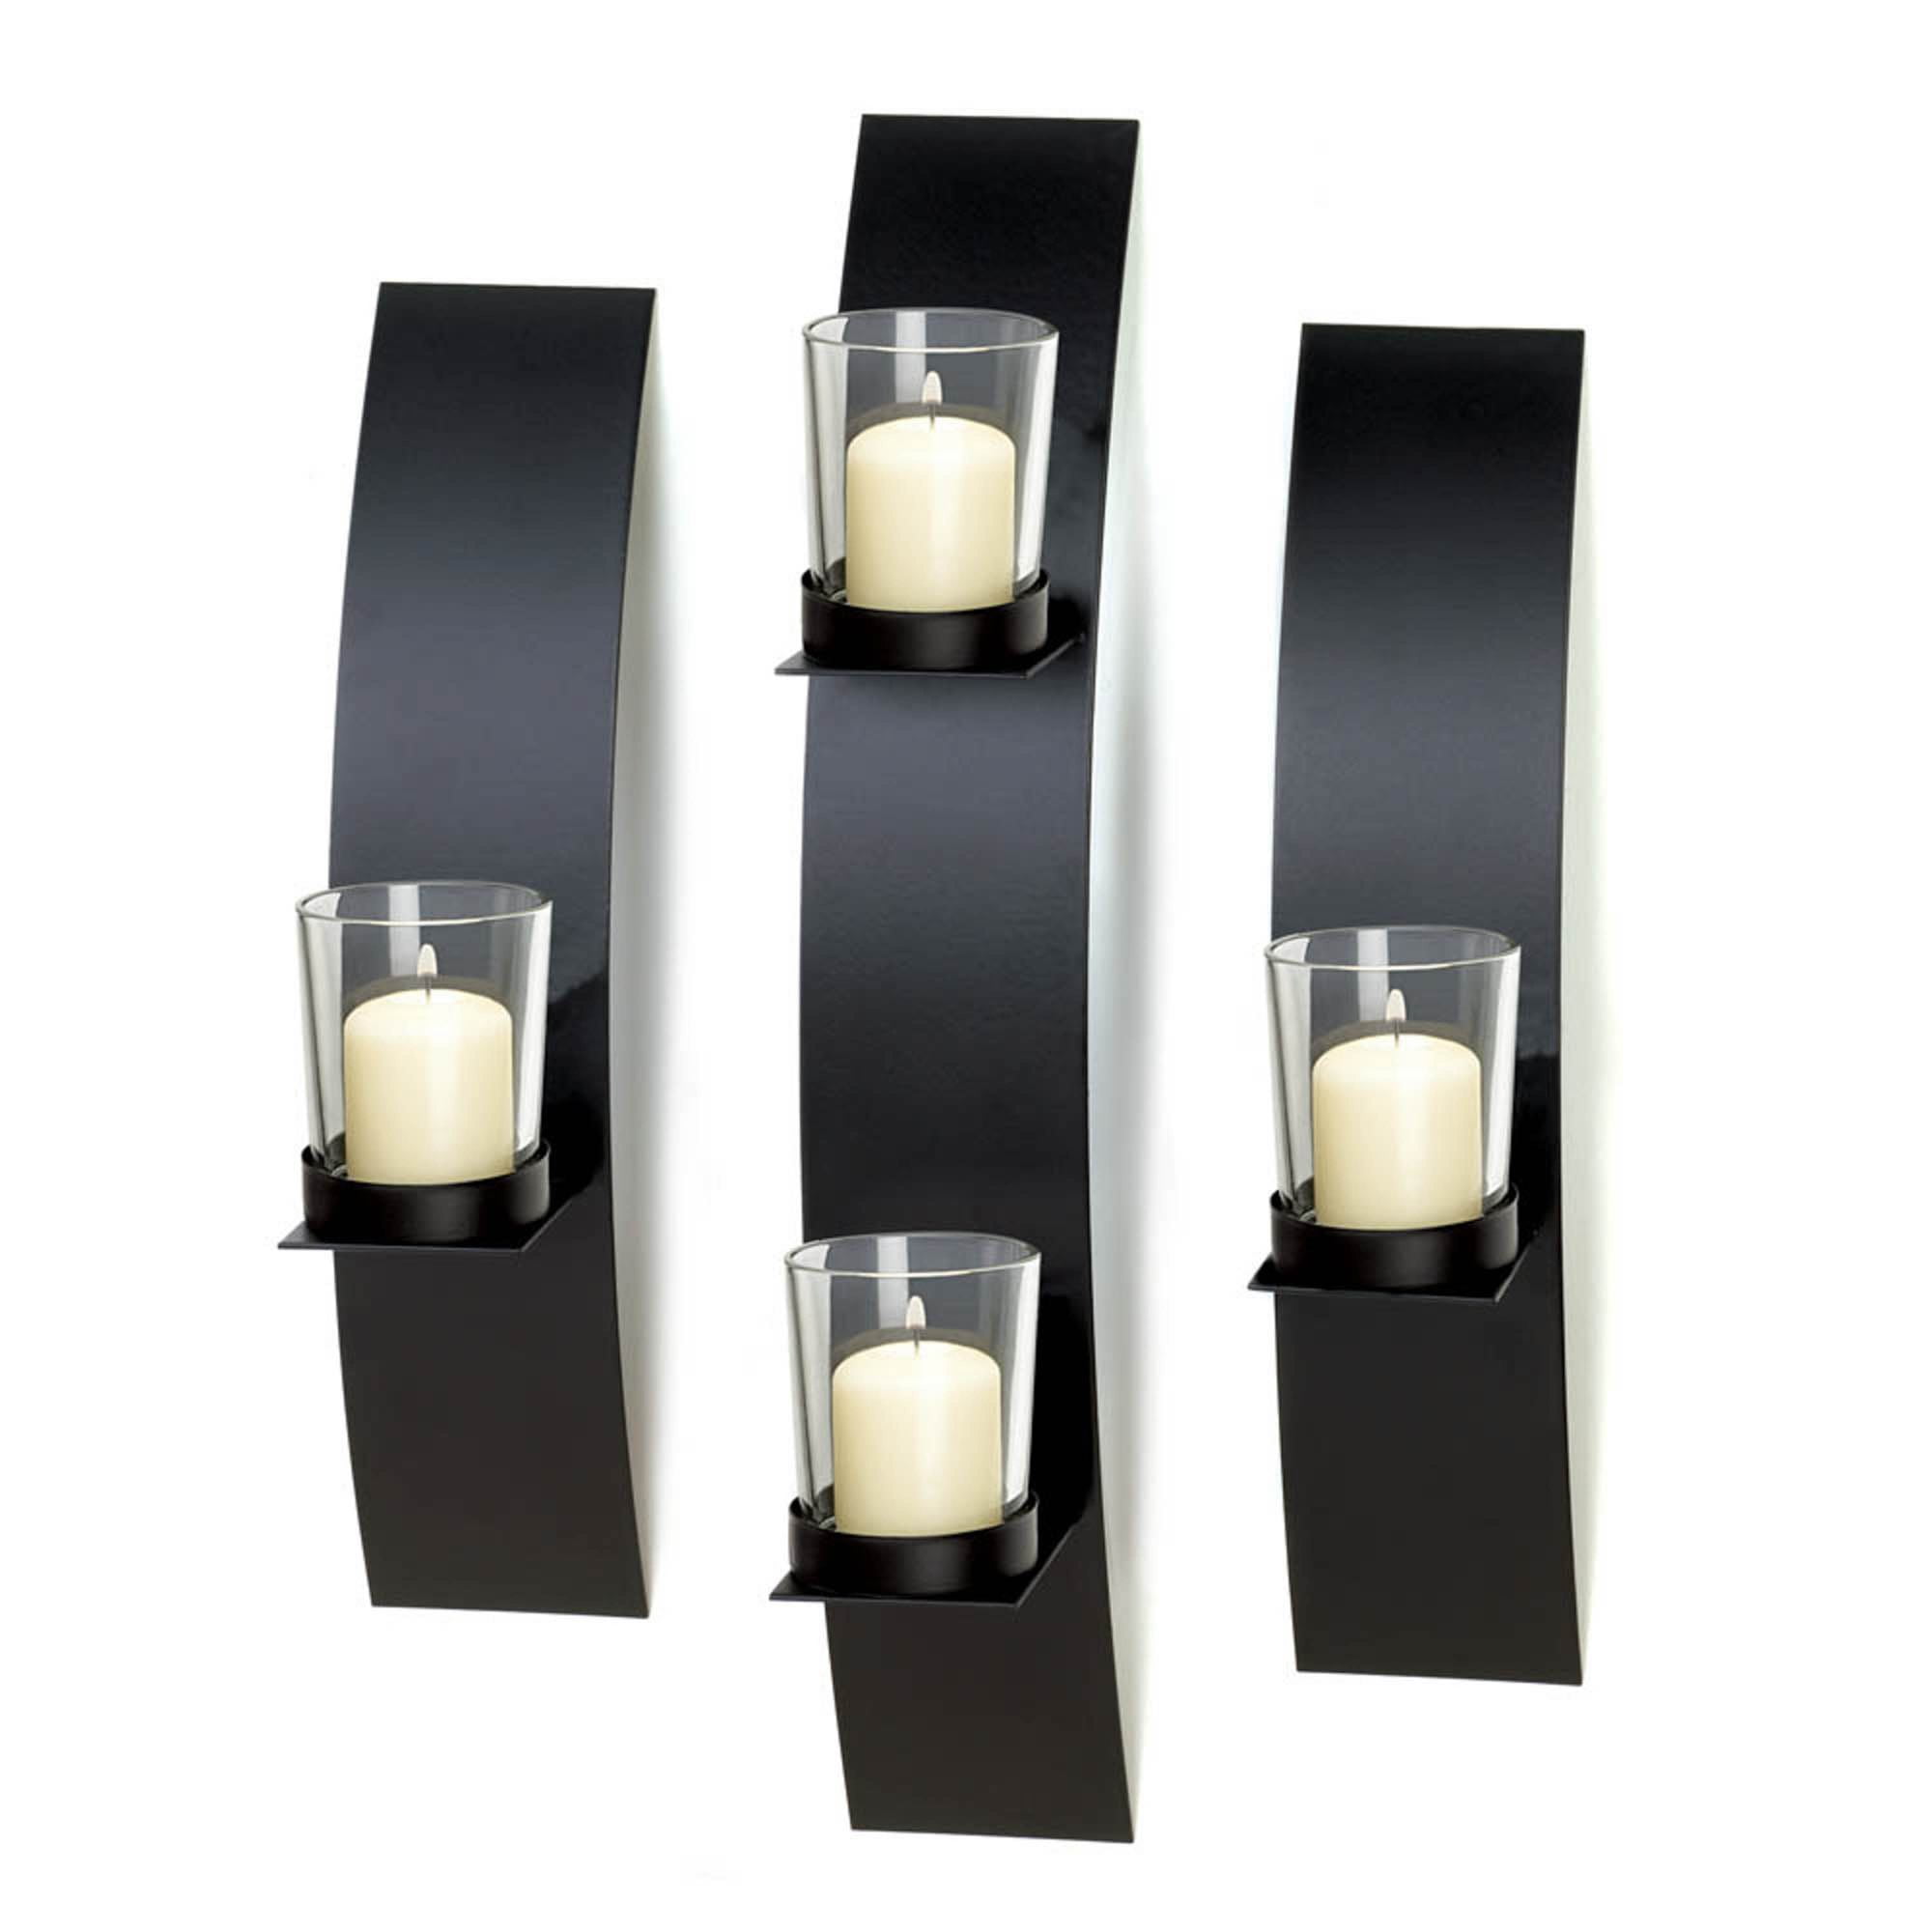 Sziqiqi Wall Candle Holder Decorative Black Candle Sconces Set of 2 